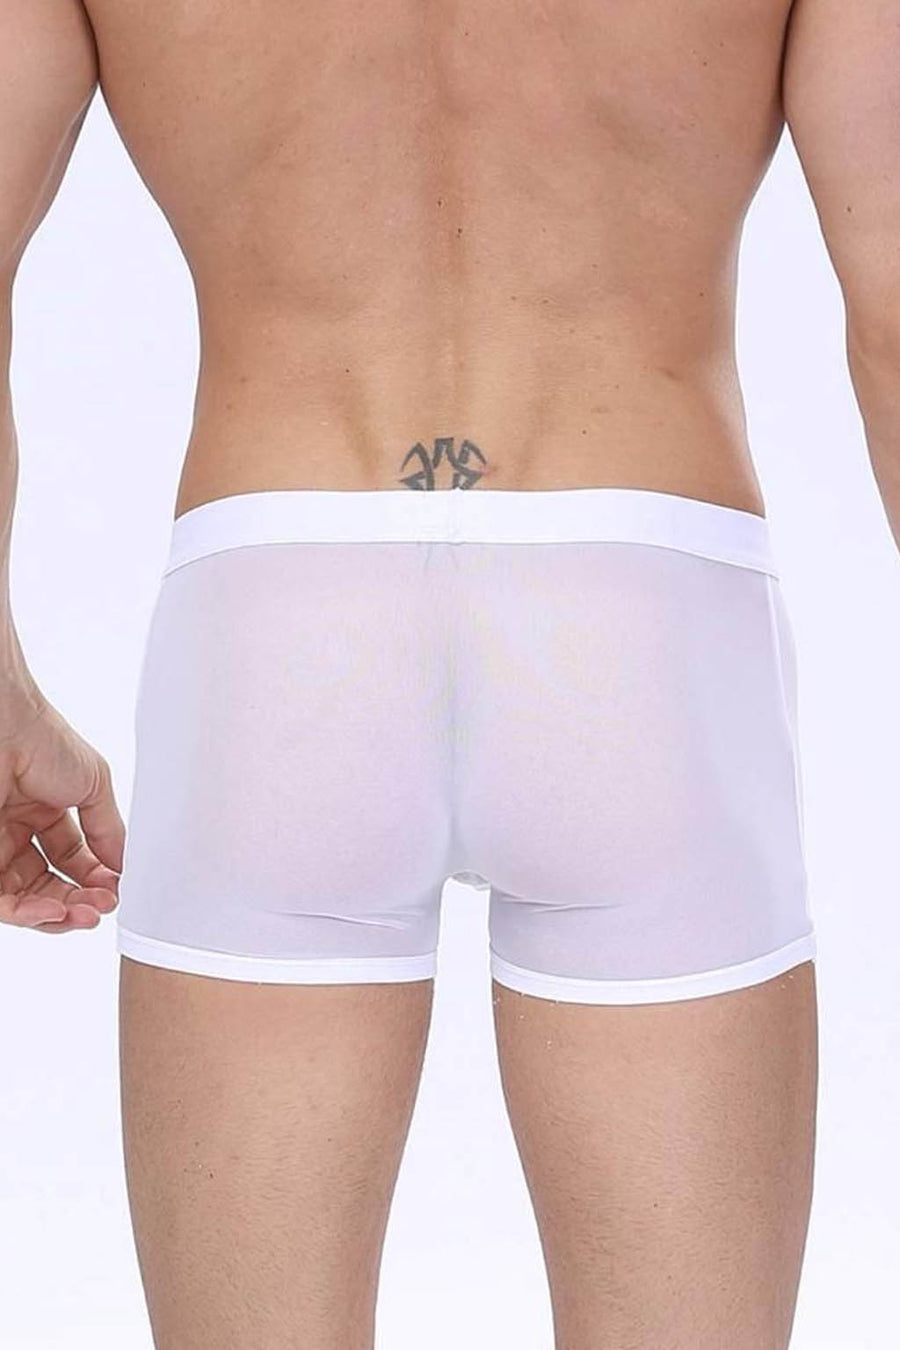 Manview Mens Sheer Net Boxer Lowrise Pouch Underwear